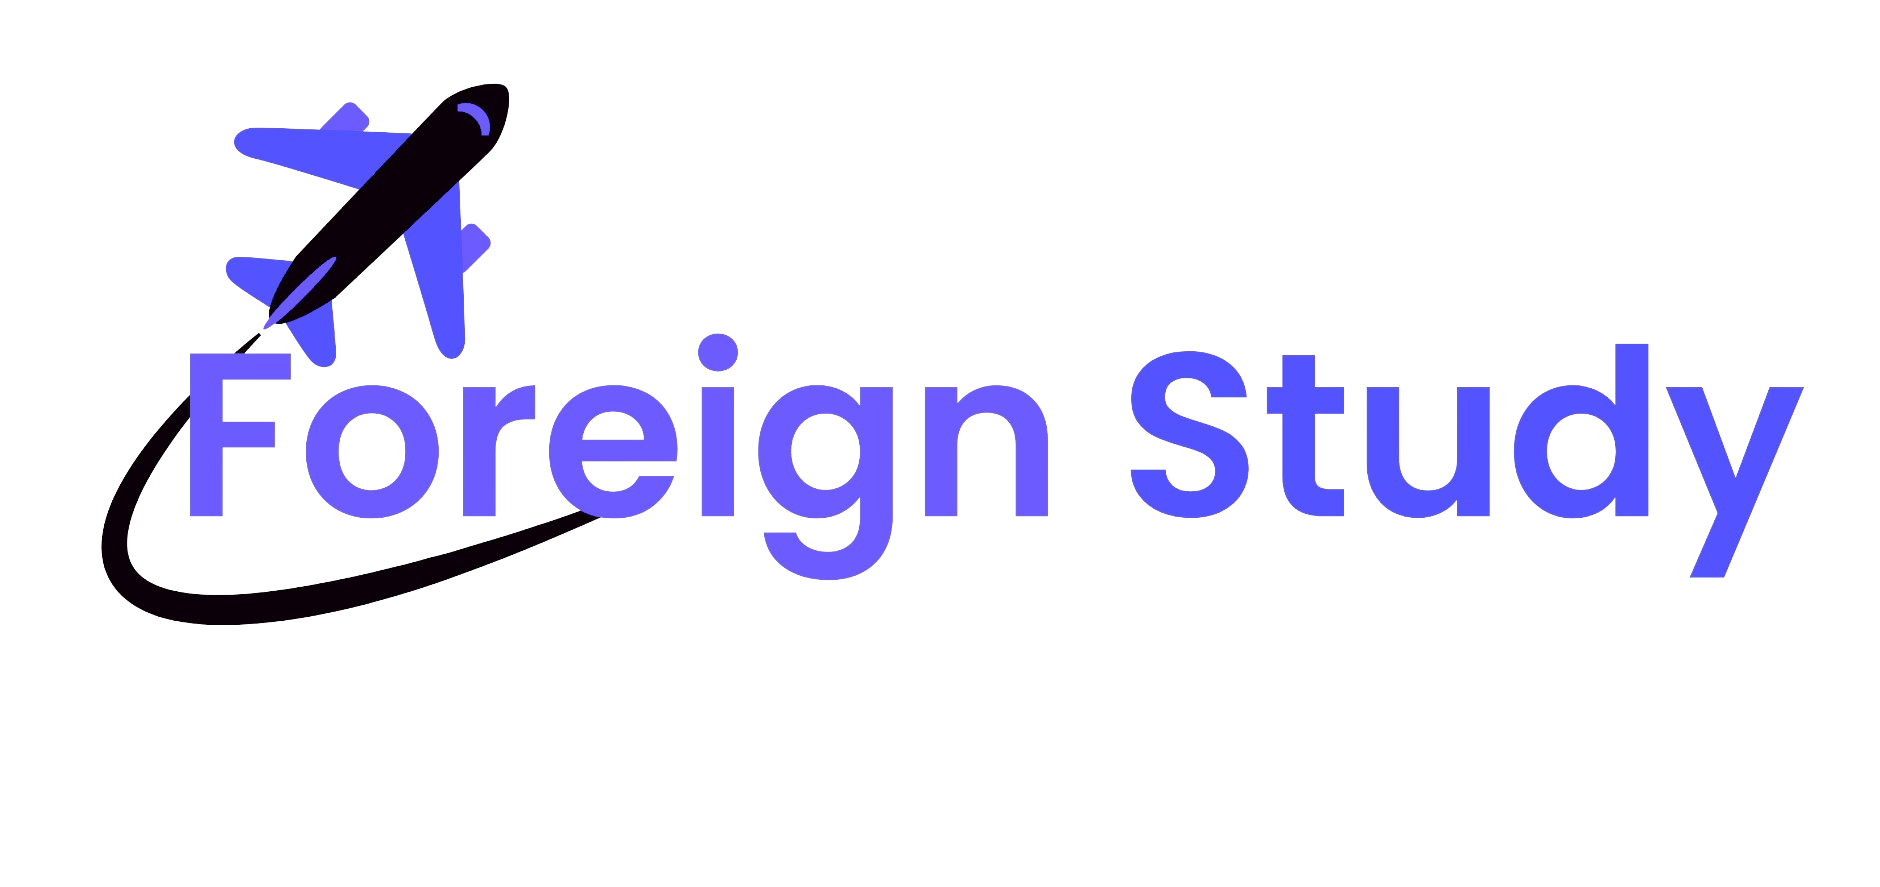 ForeignStudy – Where dreams take flight!